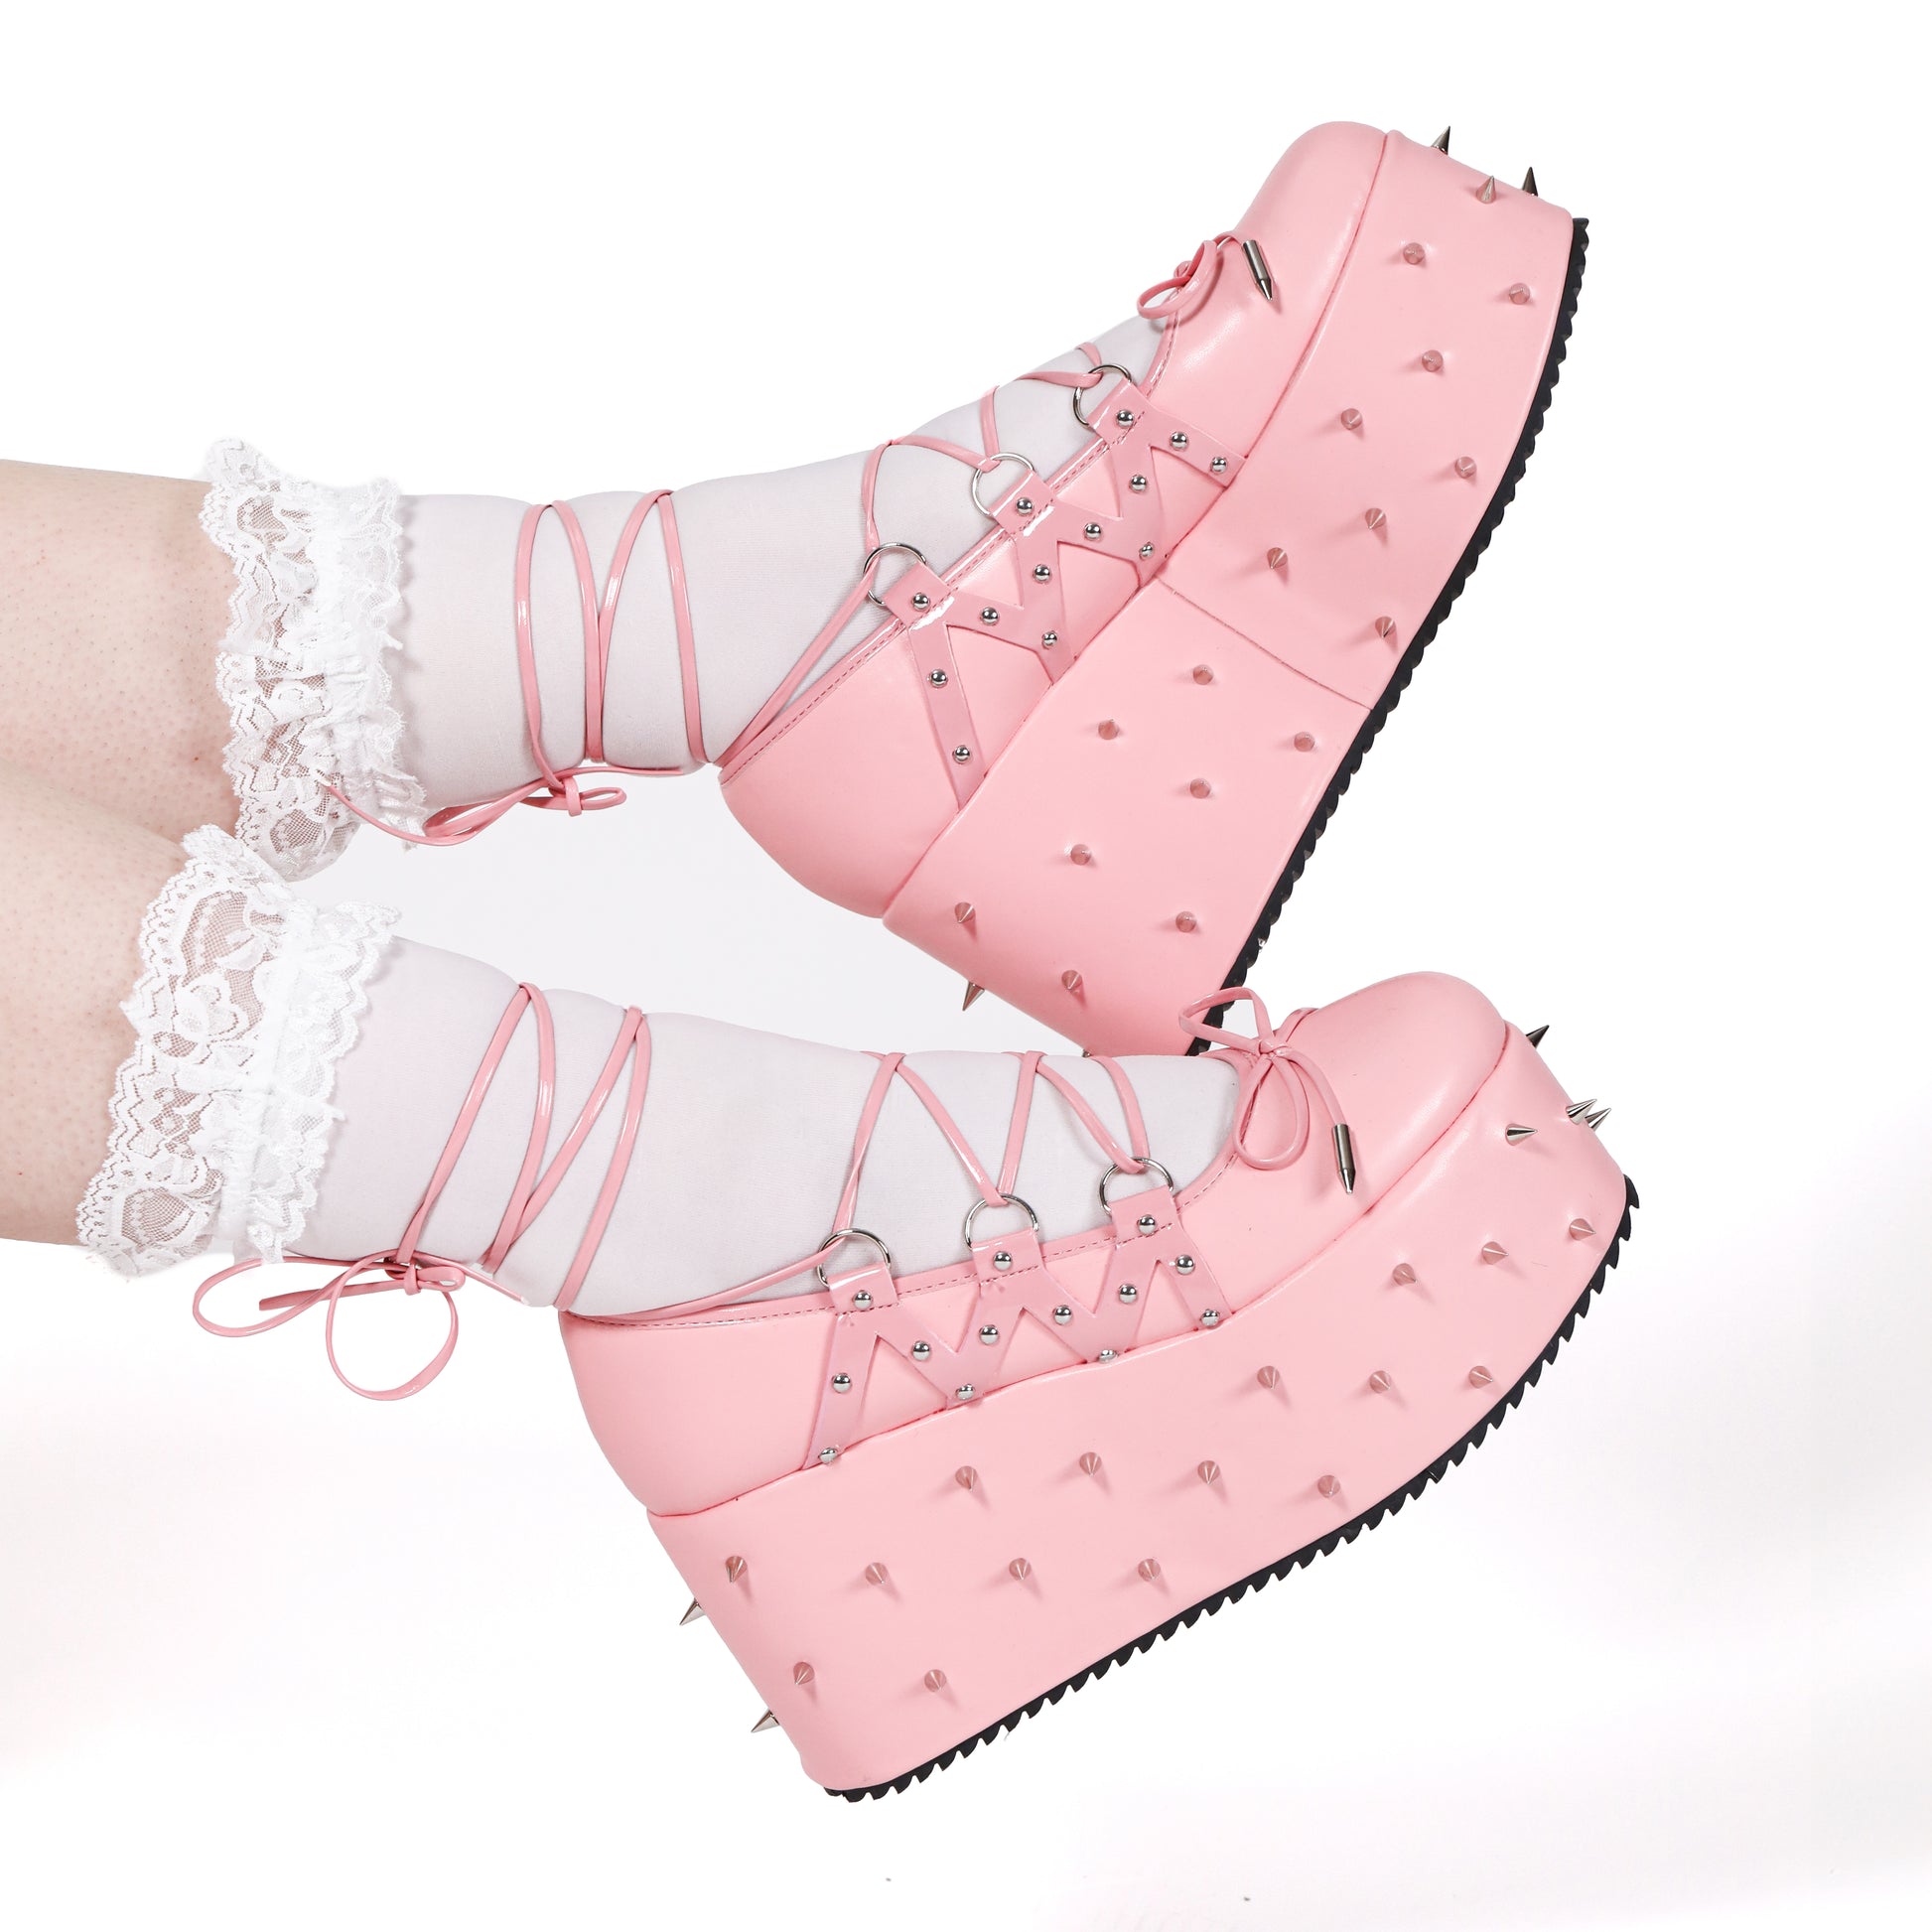 Zorina Lace Up Platform Ballet Shoes - Pink - Koi Footwear - Side Model View